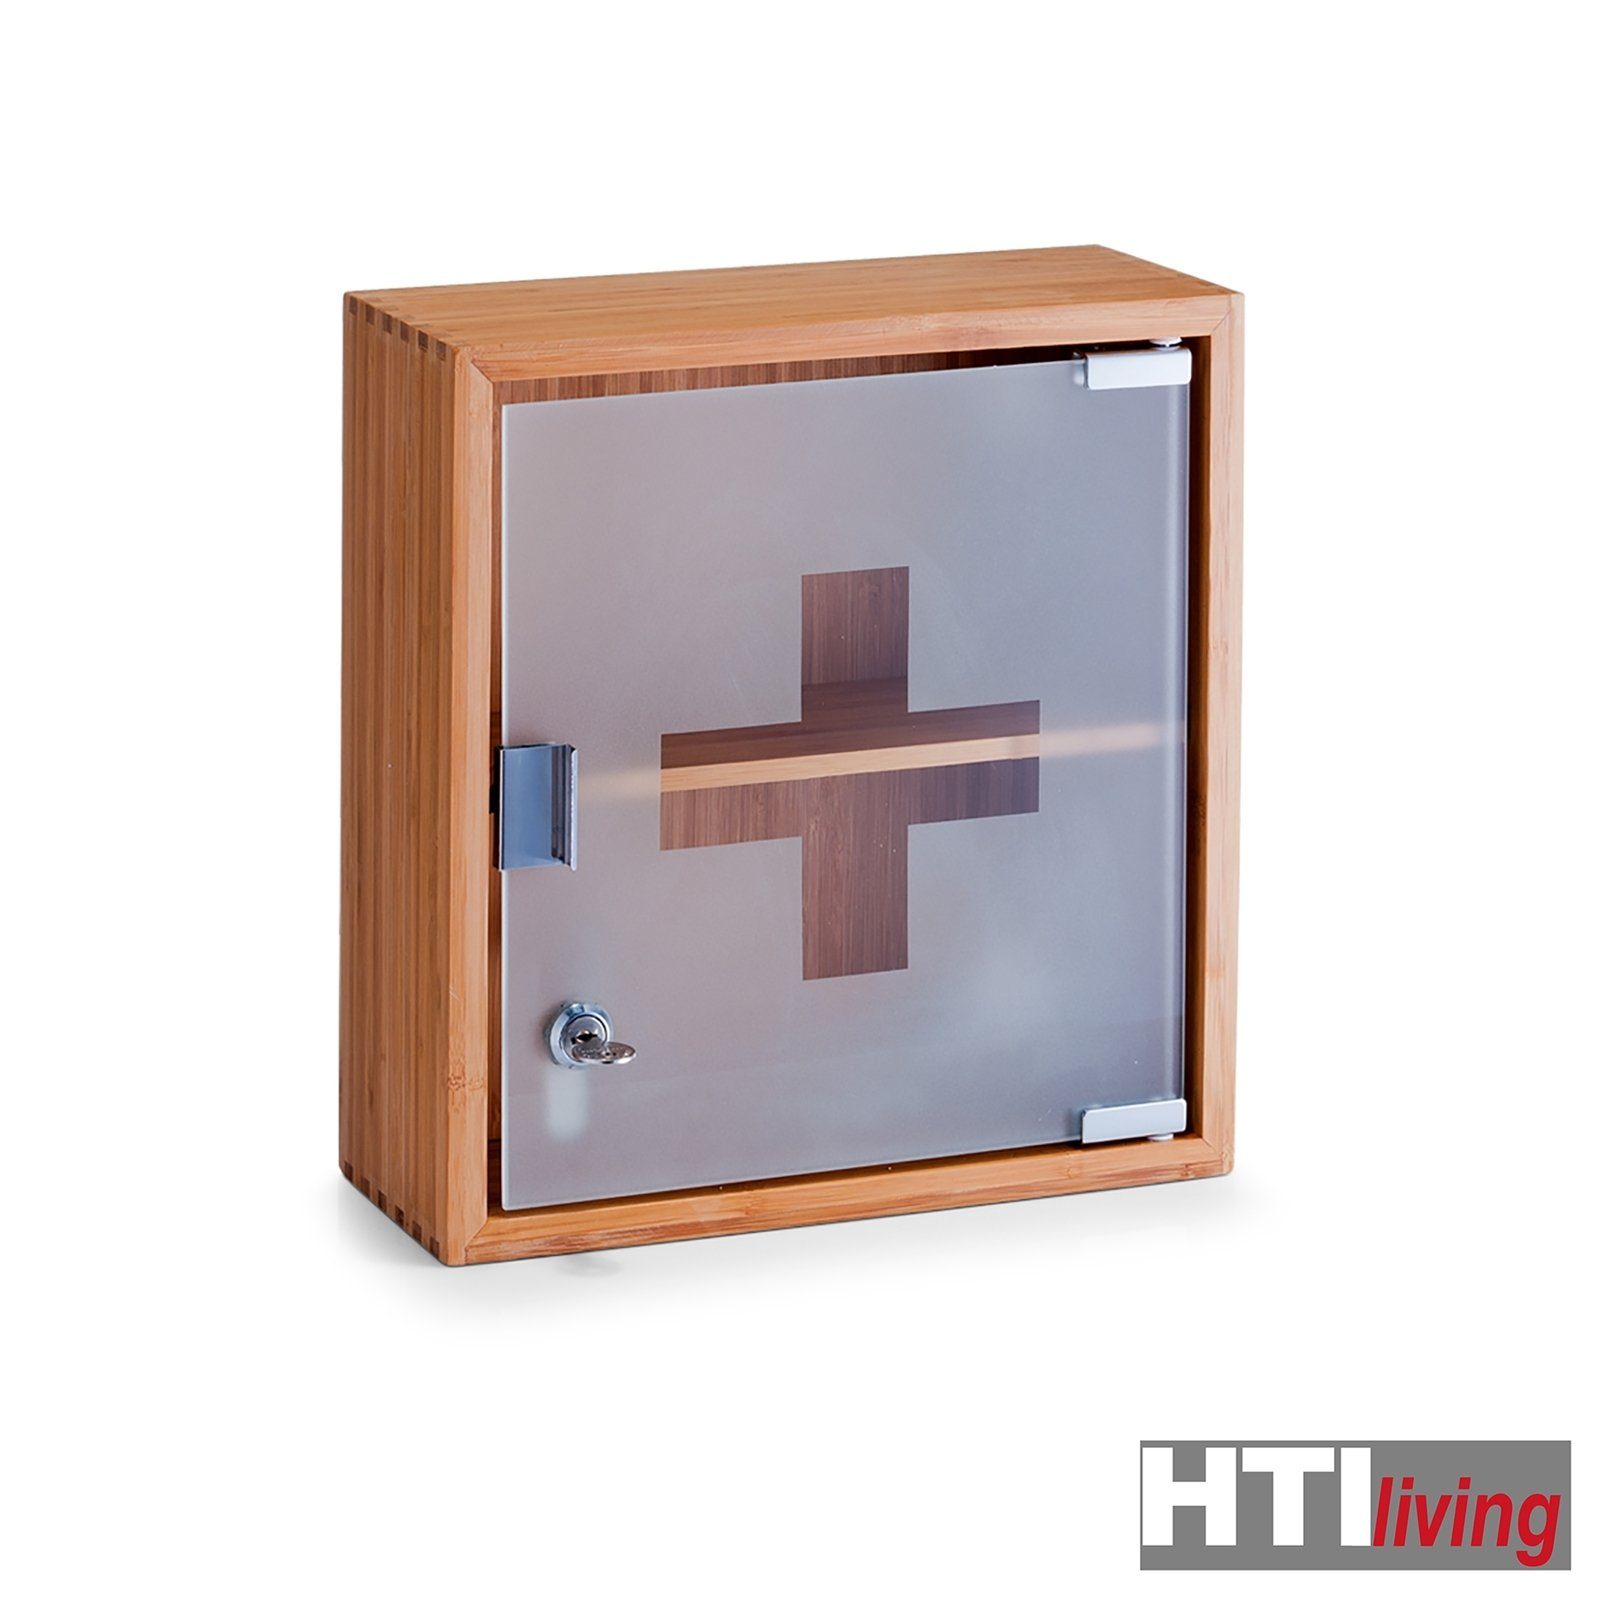 HTI-Living Medizinschrank Medizinschrank Schrank Hilfe Medizinbox Bambus/Glas Erste